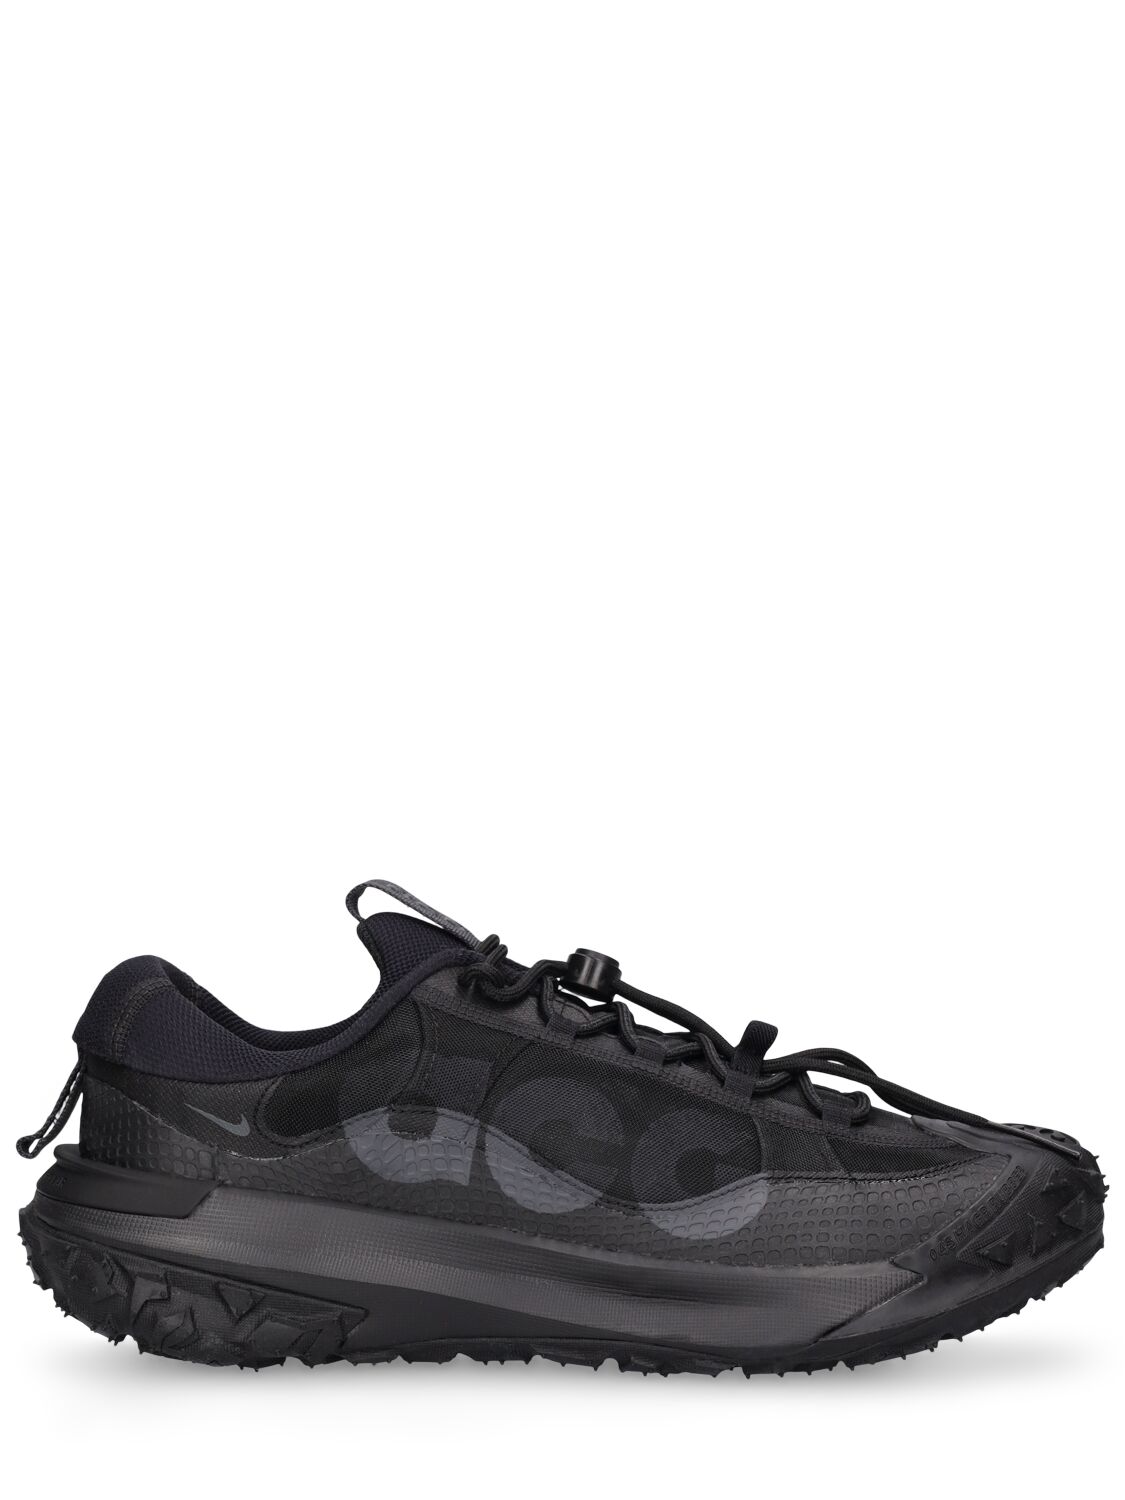 Nike Acg Mountain Fly 2 Low Sneaker In Black/anthracite-black-black-lime Blast